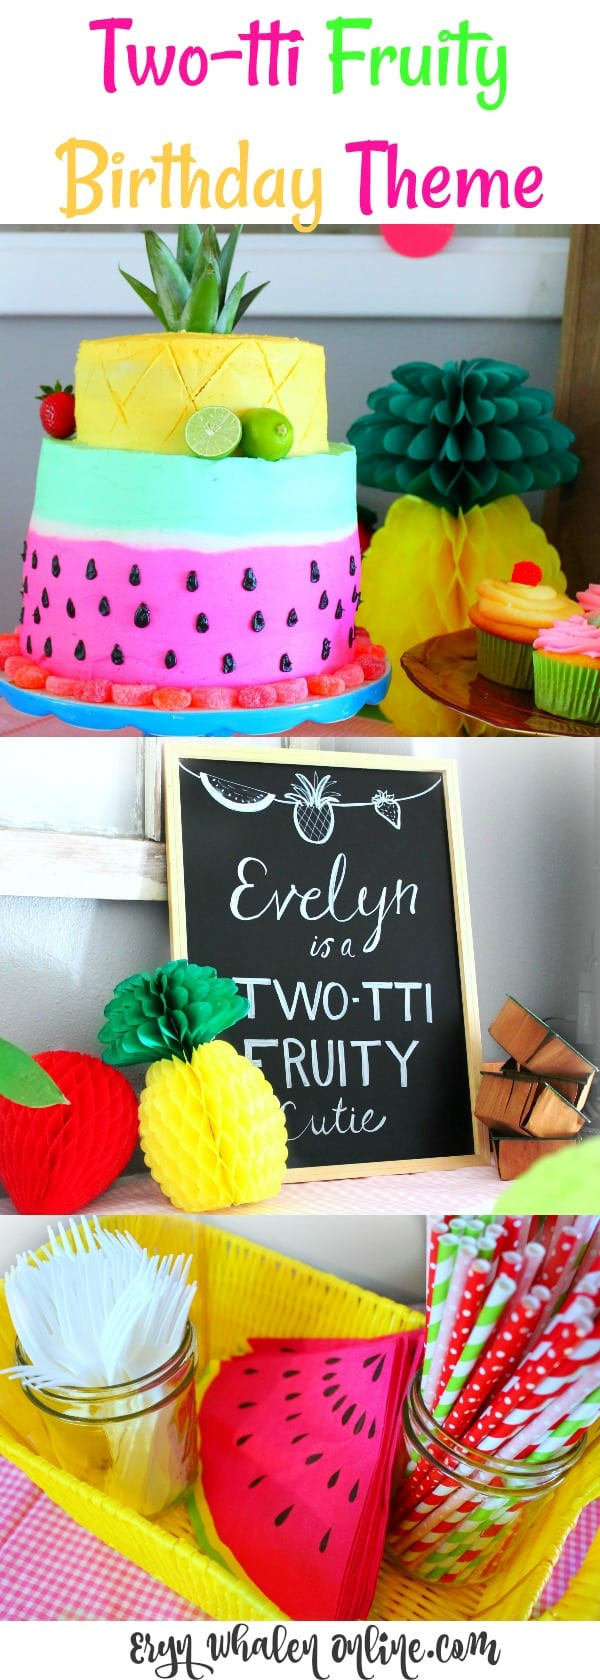 2 Year Old Birthday Party Ideas Summer
 A Two tti Fruity Birthday Party Eryn Whalen